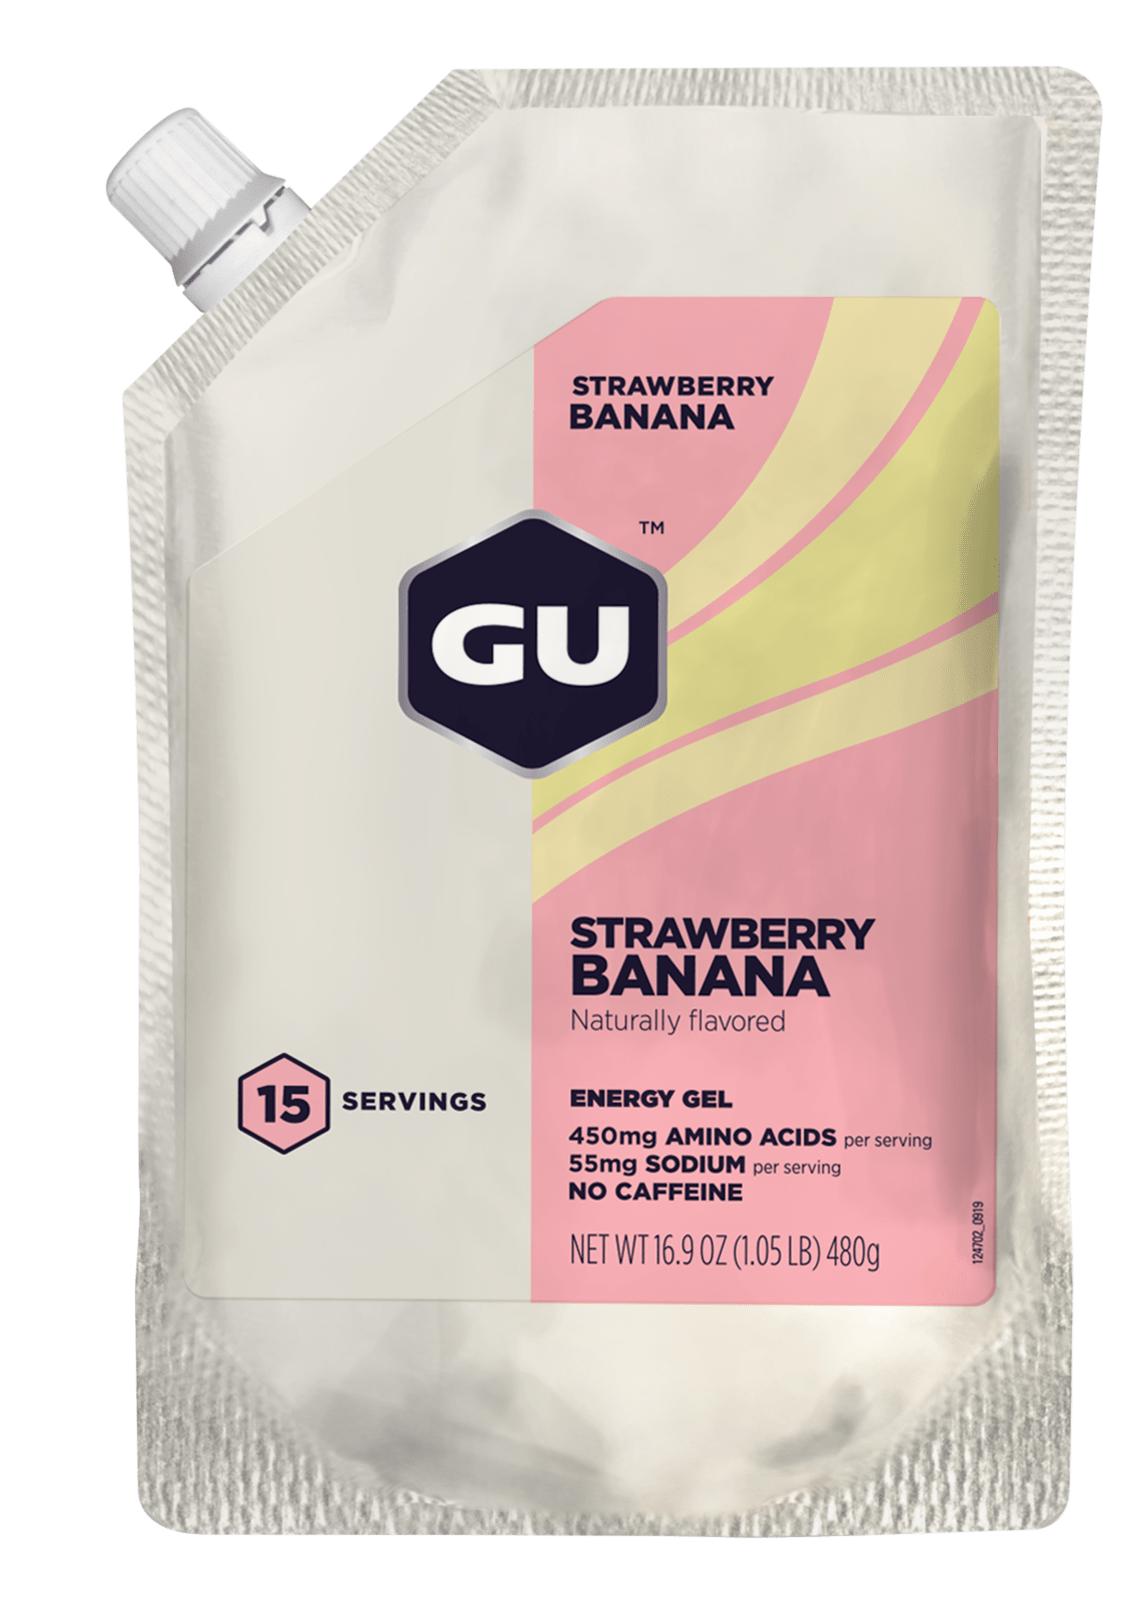 GU Energi gel strawberry banana 15 serving